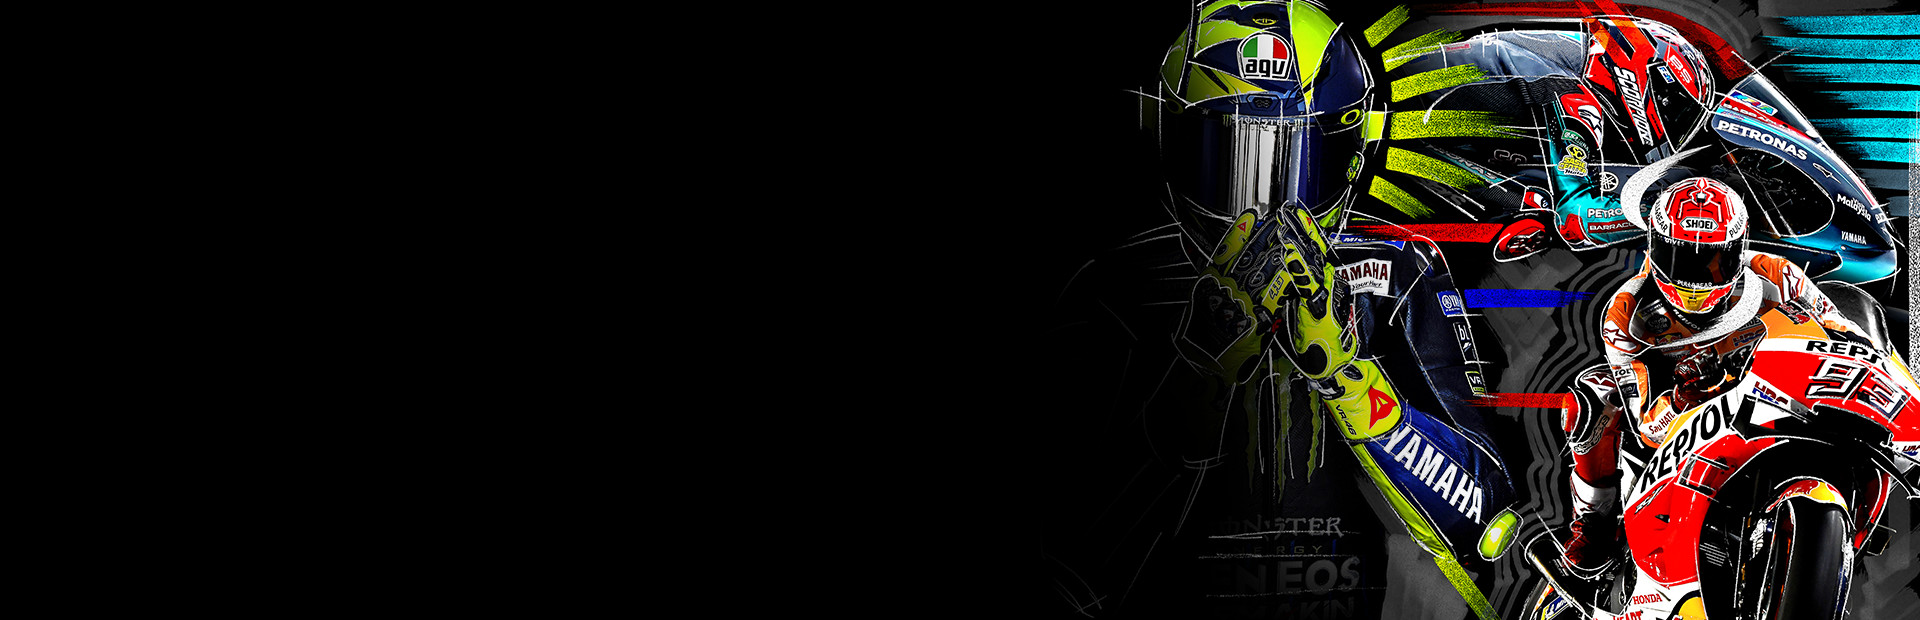 MotoGP™20 cover image